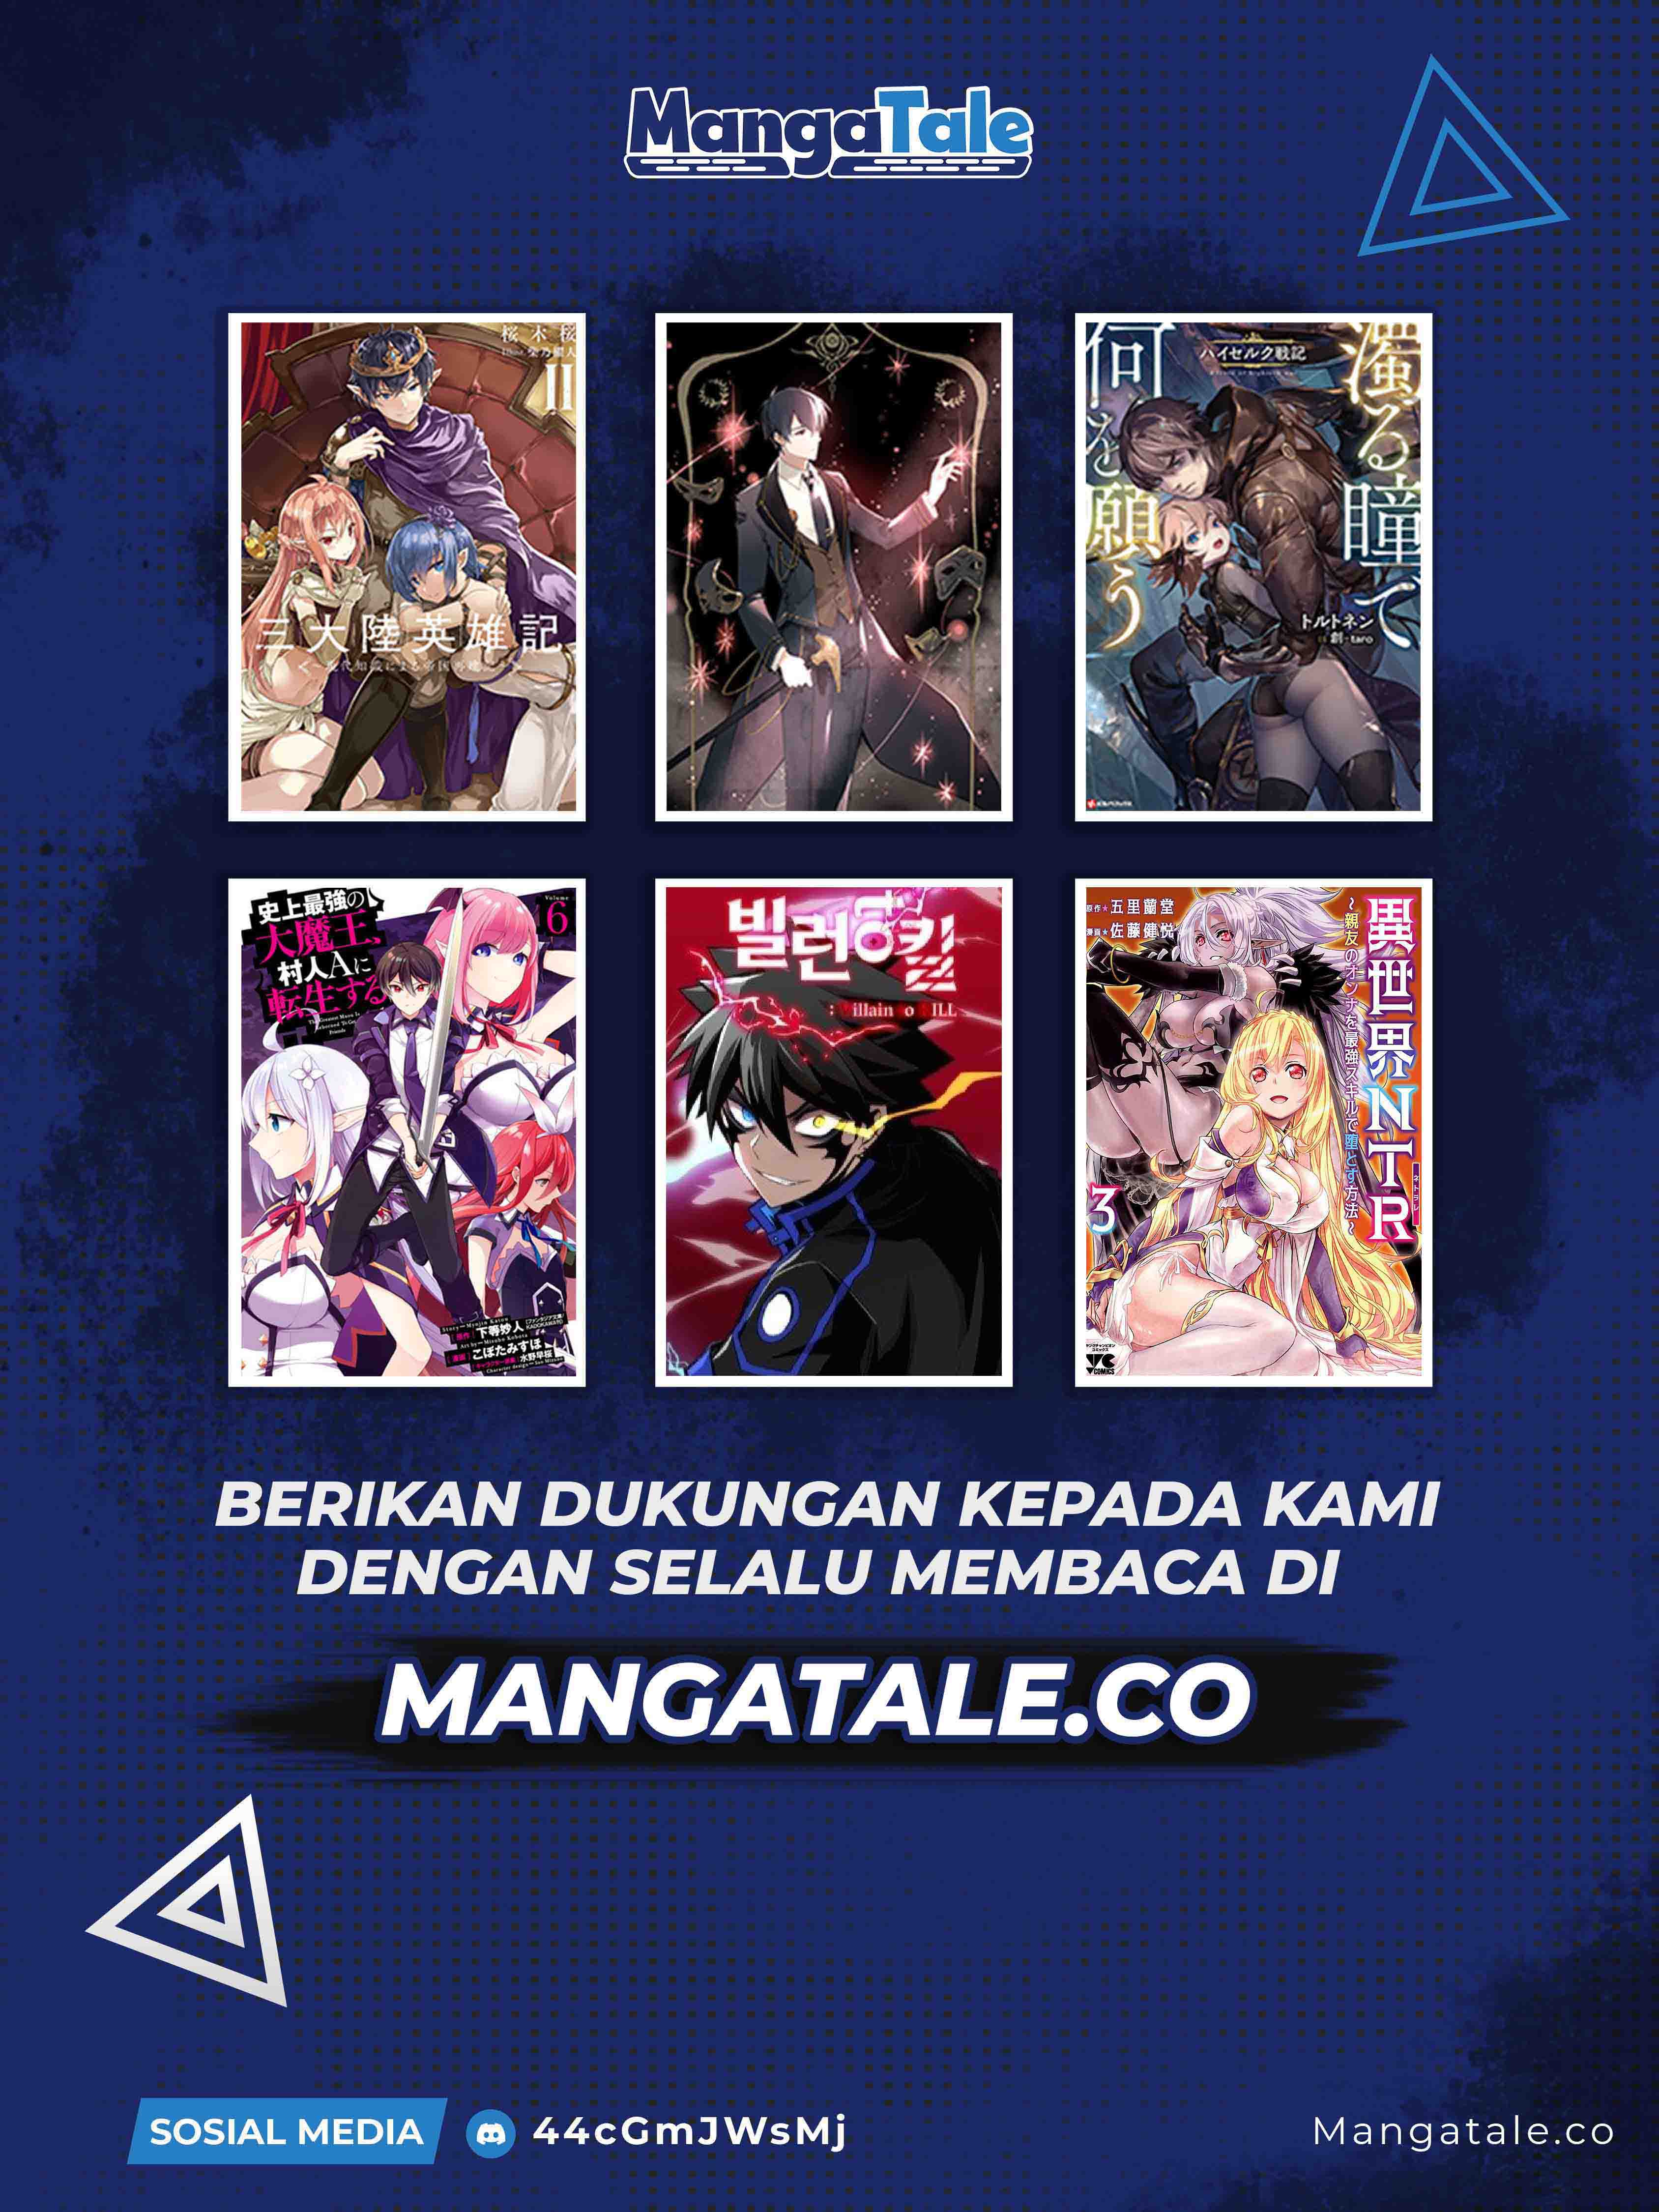 Knights & Magic Chapter 111 Bahasa Indonesia